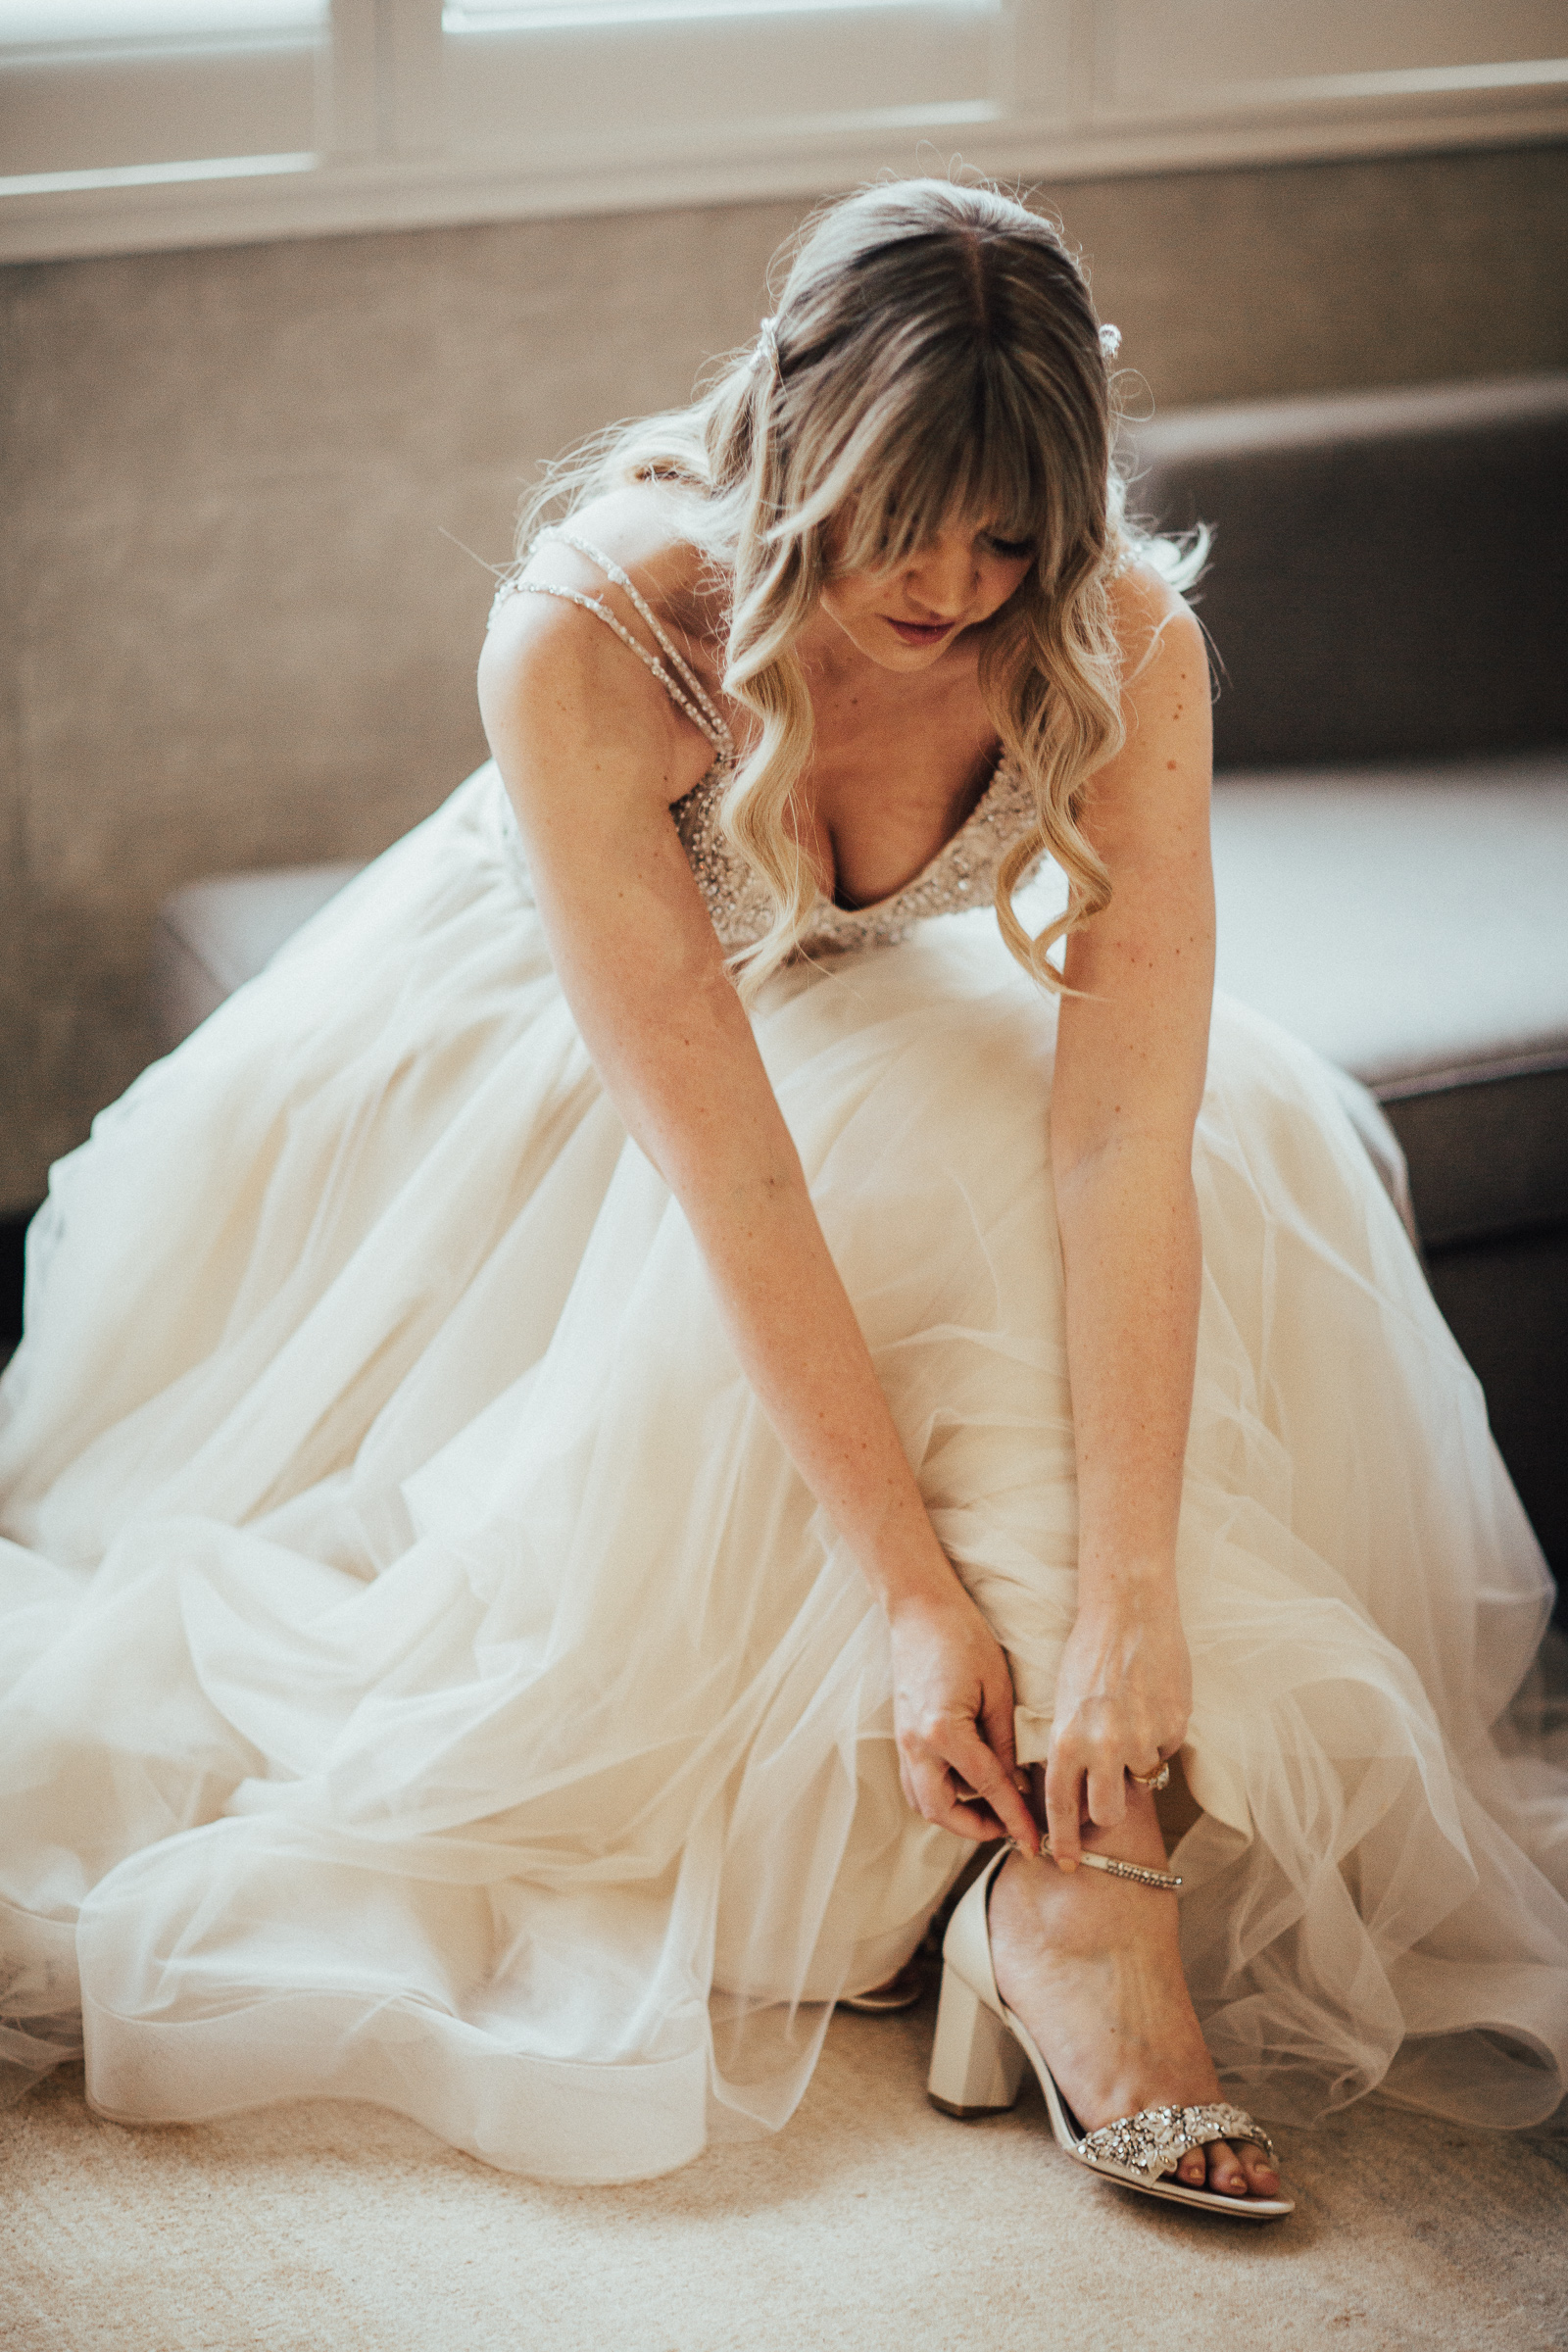 Maison Selby Wedding by Toronto Wedding Photographer